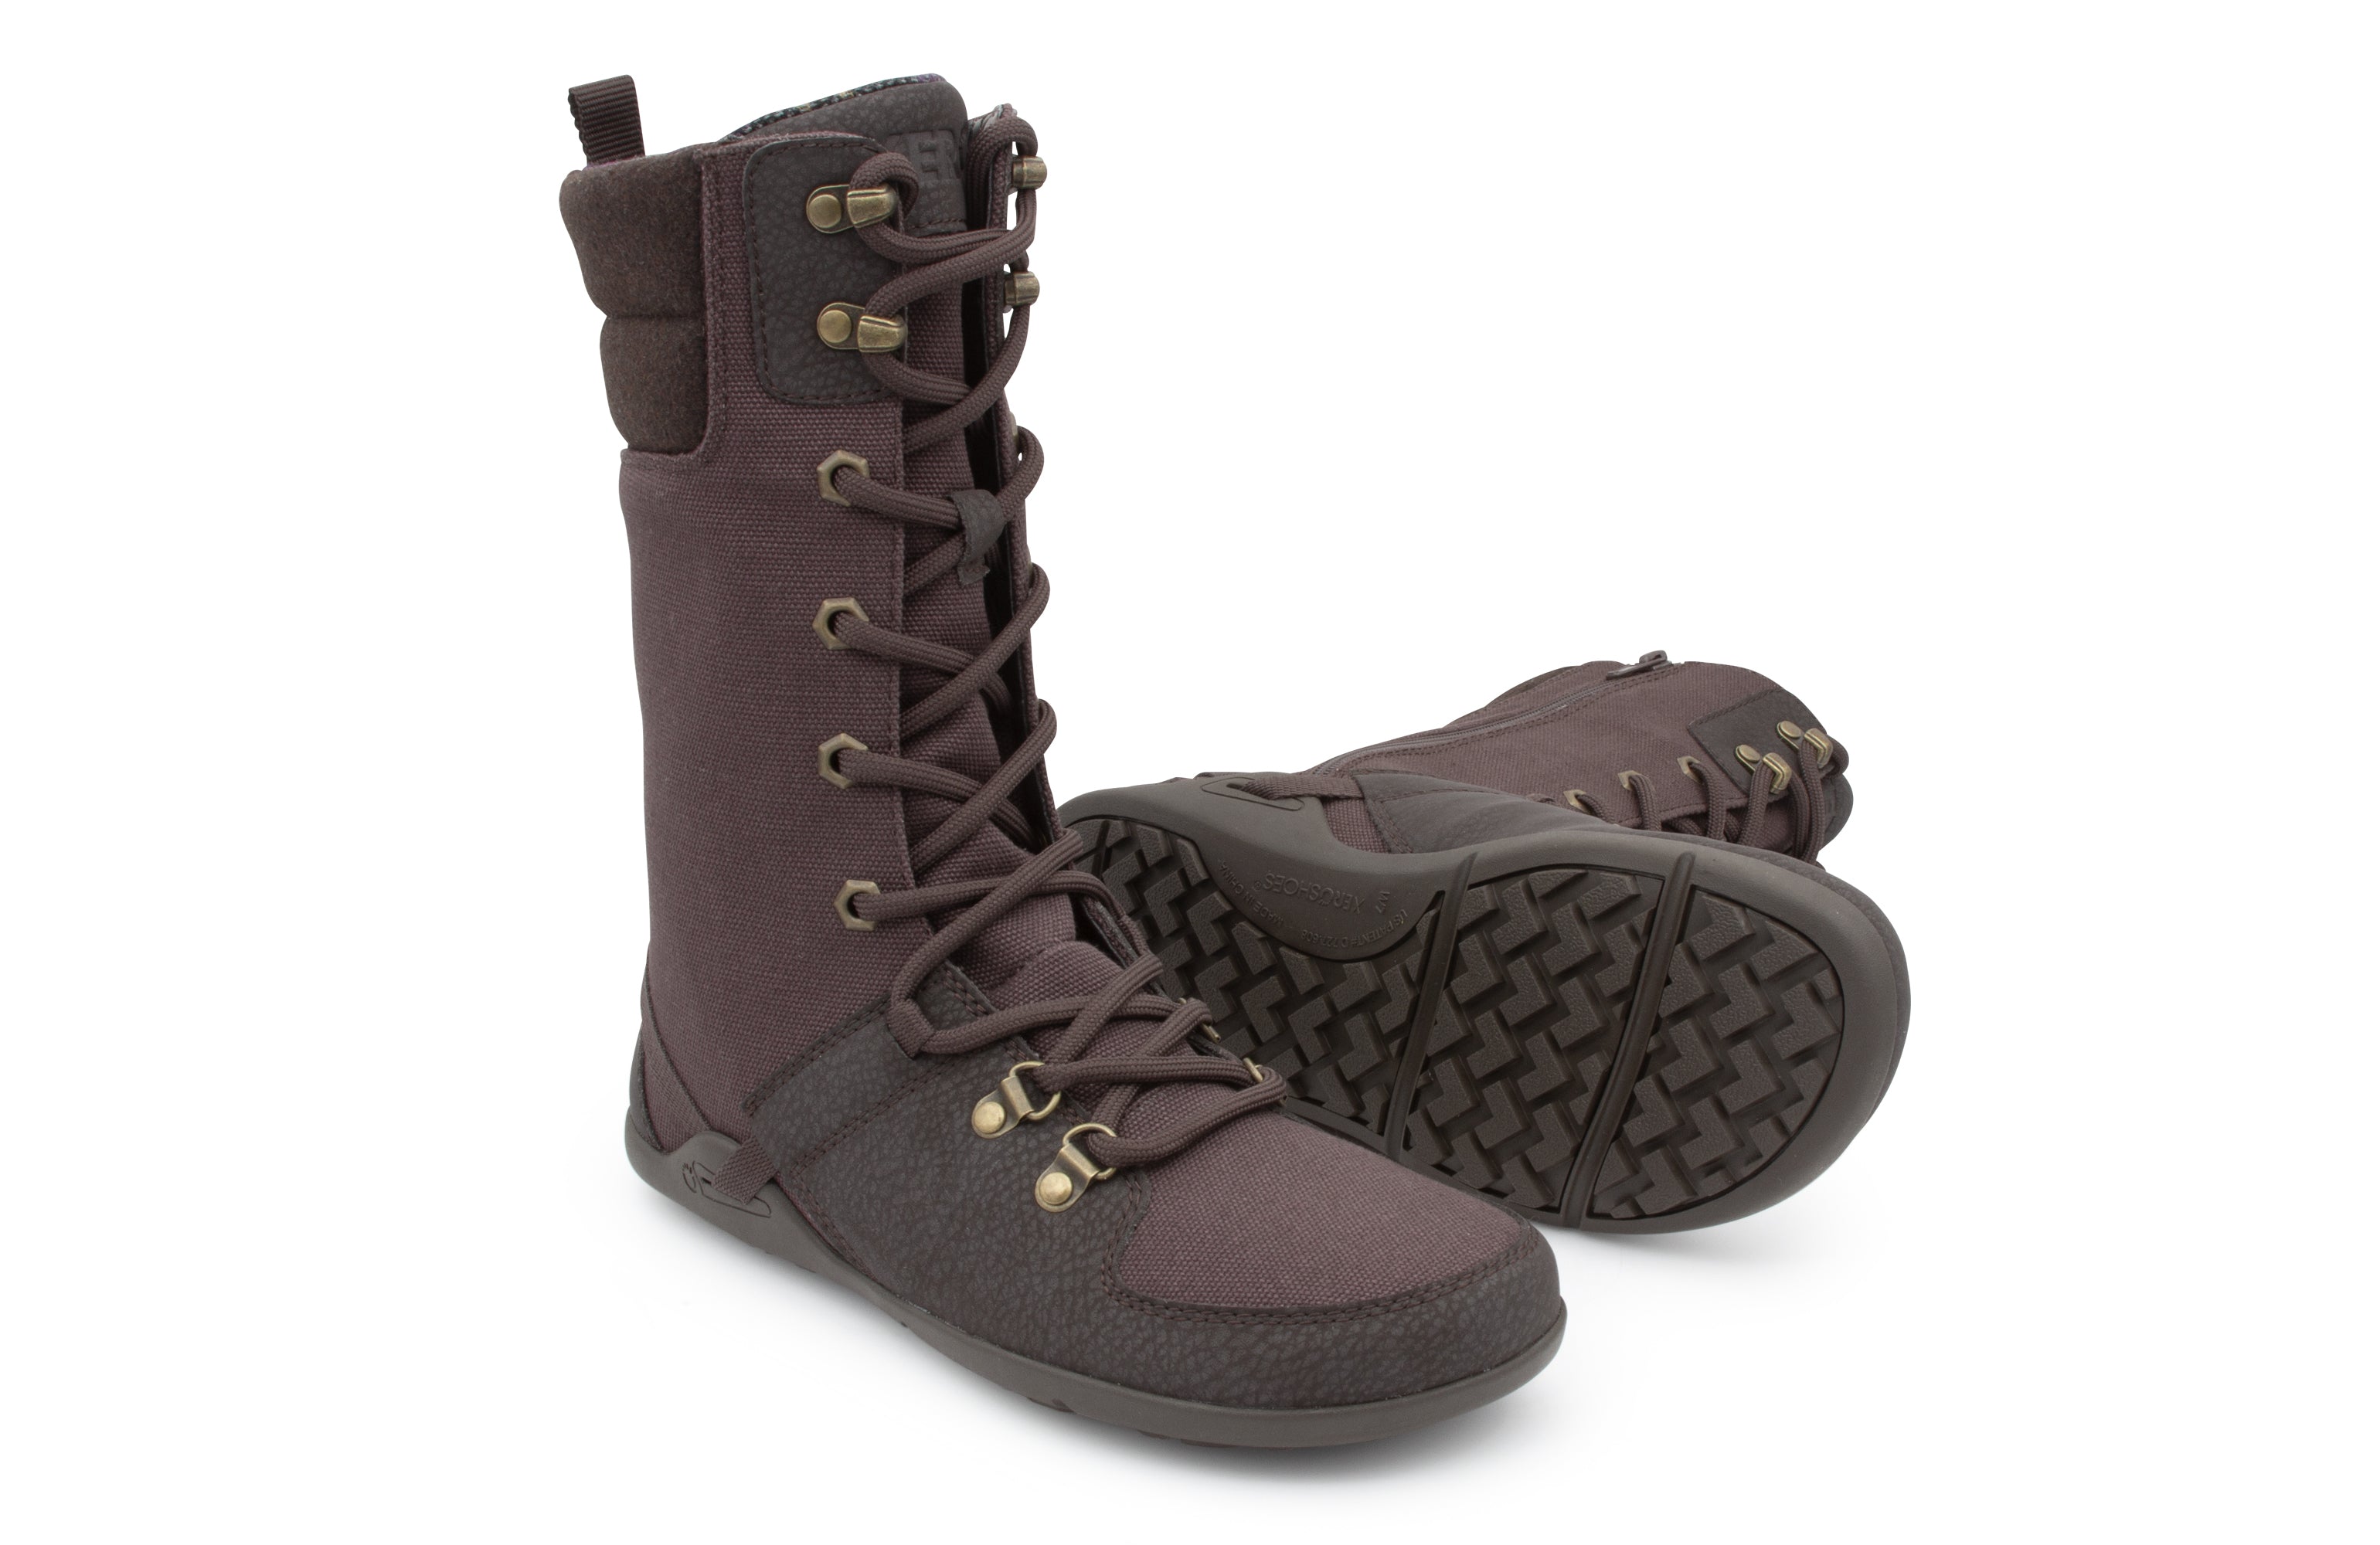 Xero Shoes Mika barfods vinterstøvler til kvinder i farven chocolate plum, par